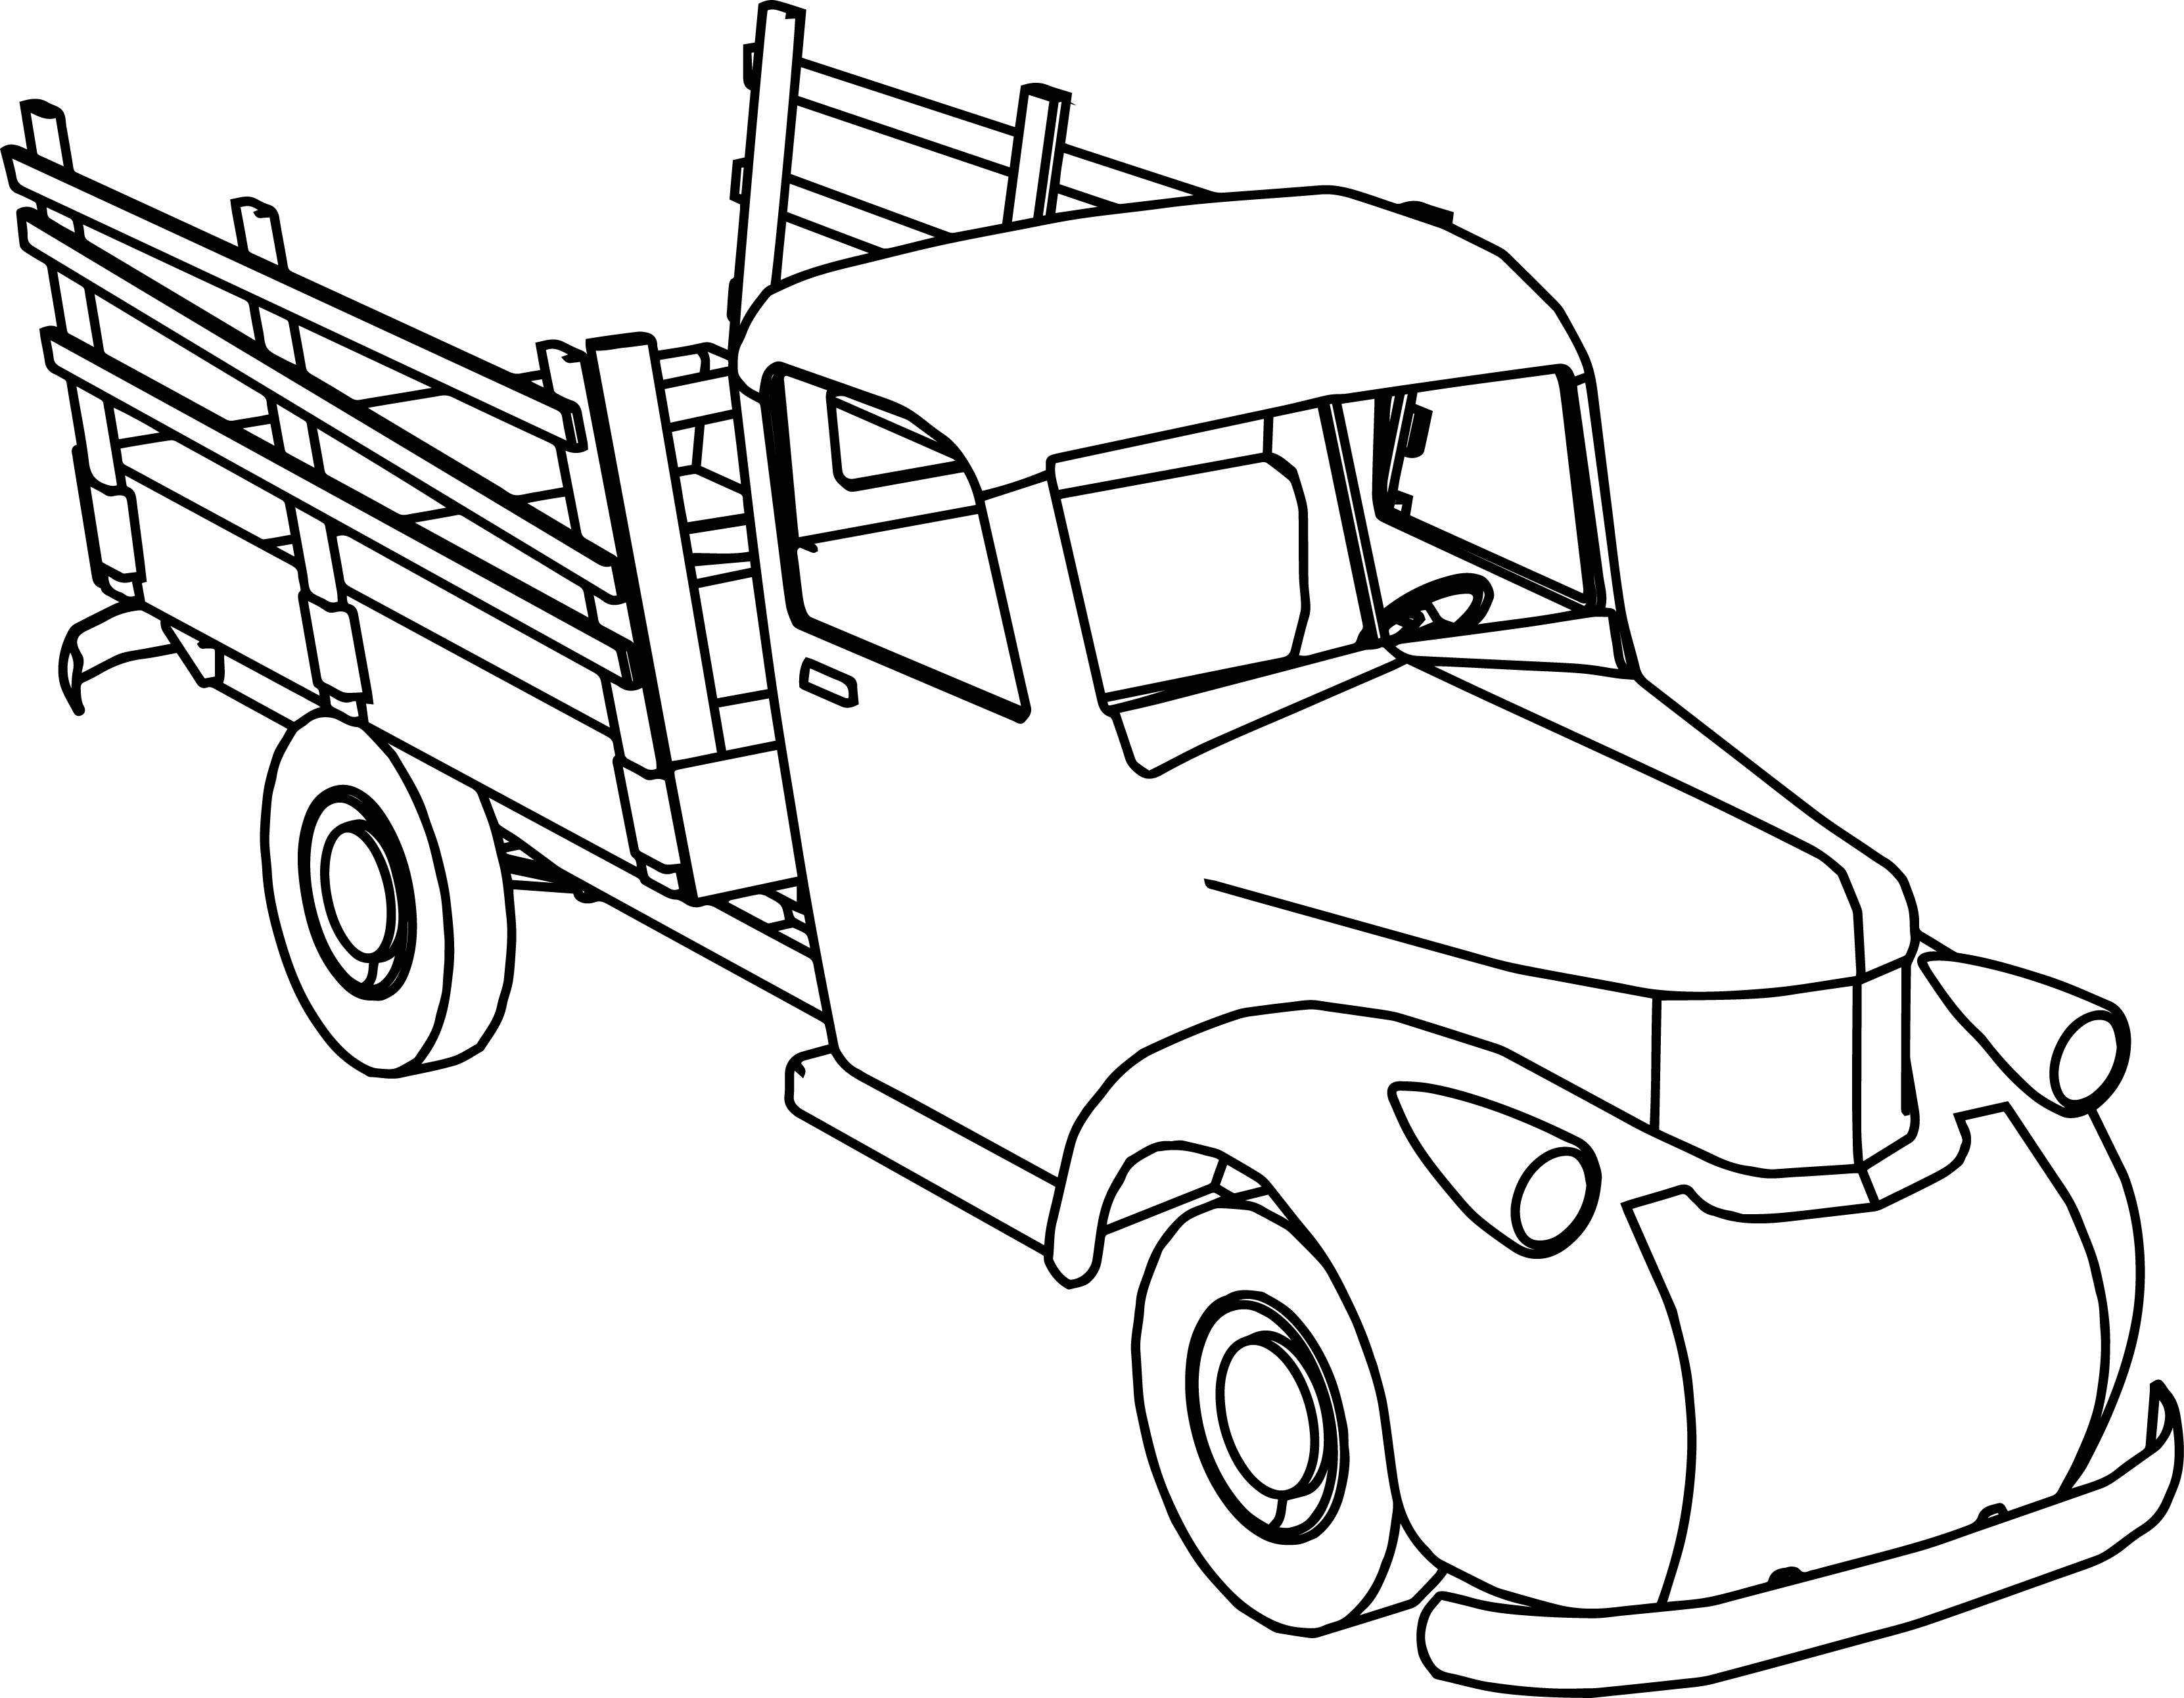 Diesel Truck Coloring Pages at GetColorings.com | Free printable